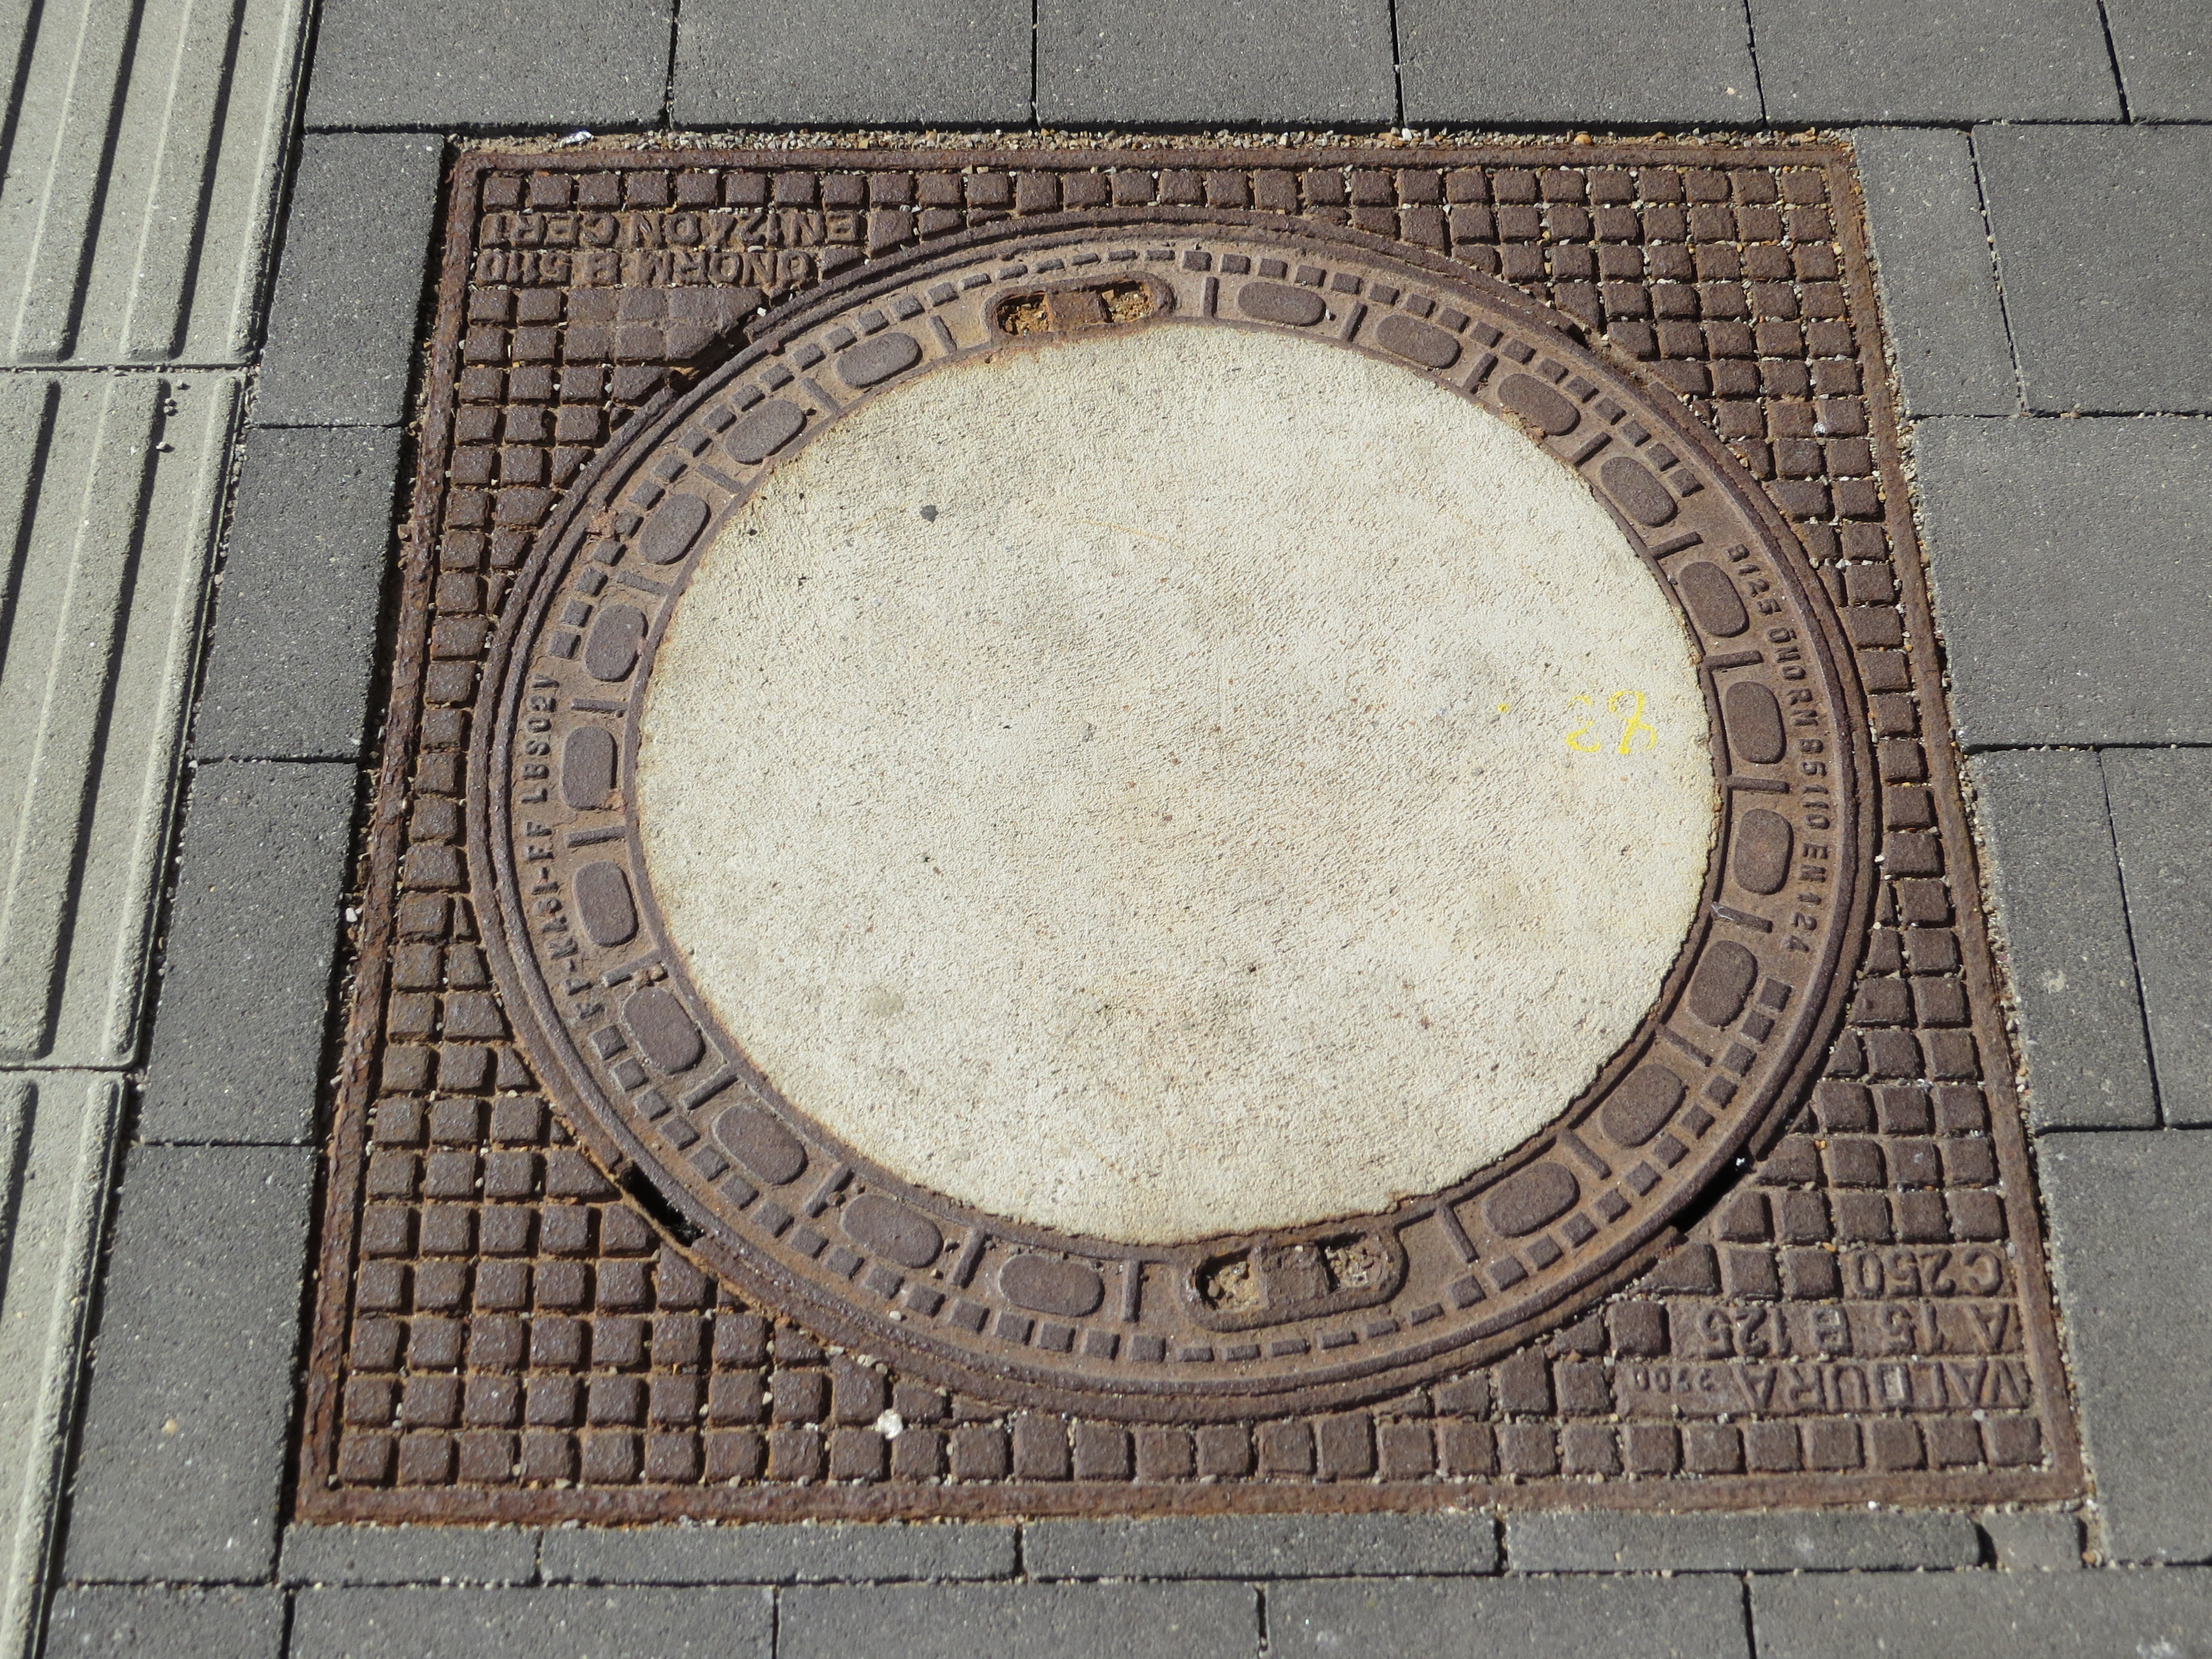 2017-09-28 (634) Manhole cover at Bahnhof Tullnerfeld